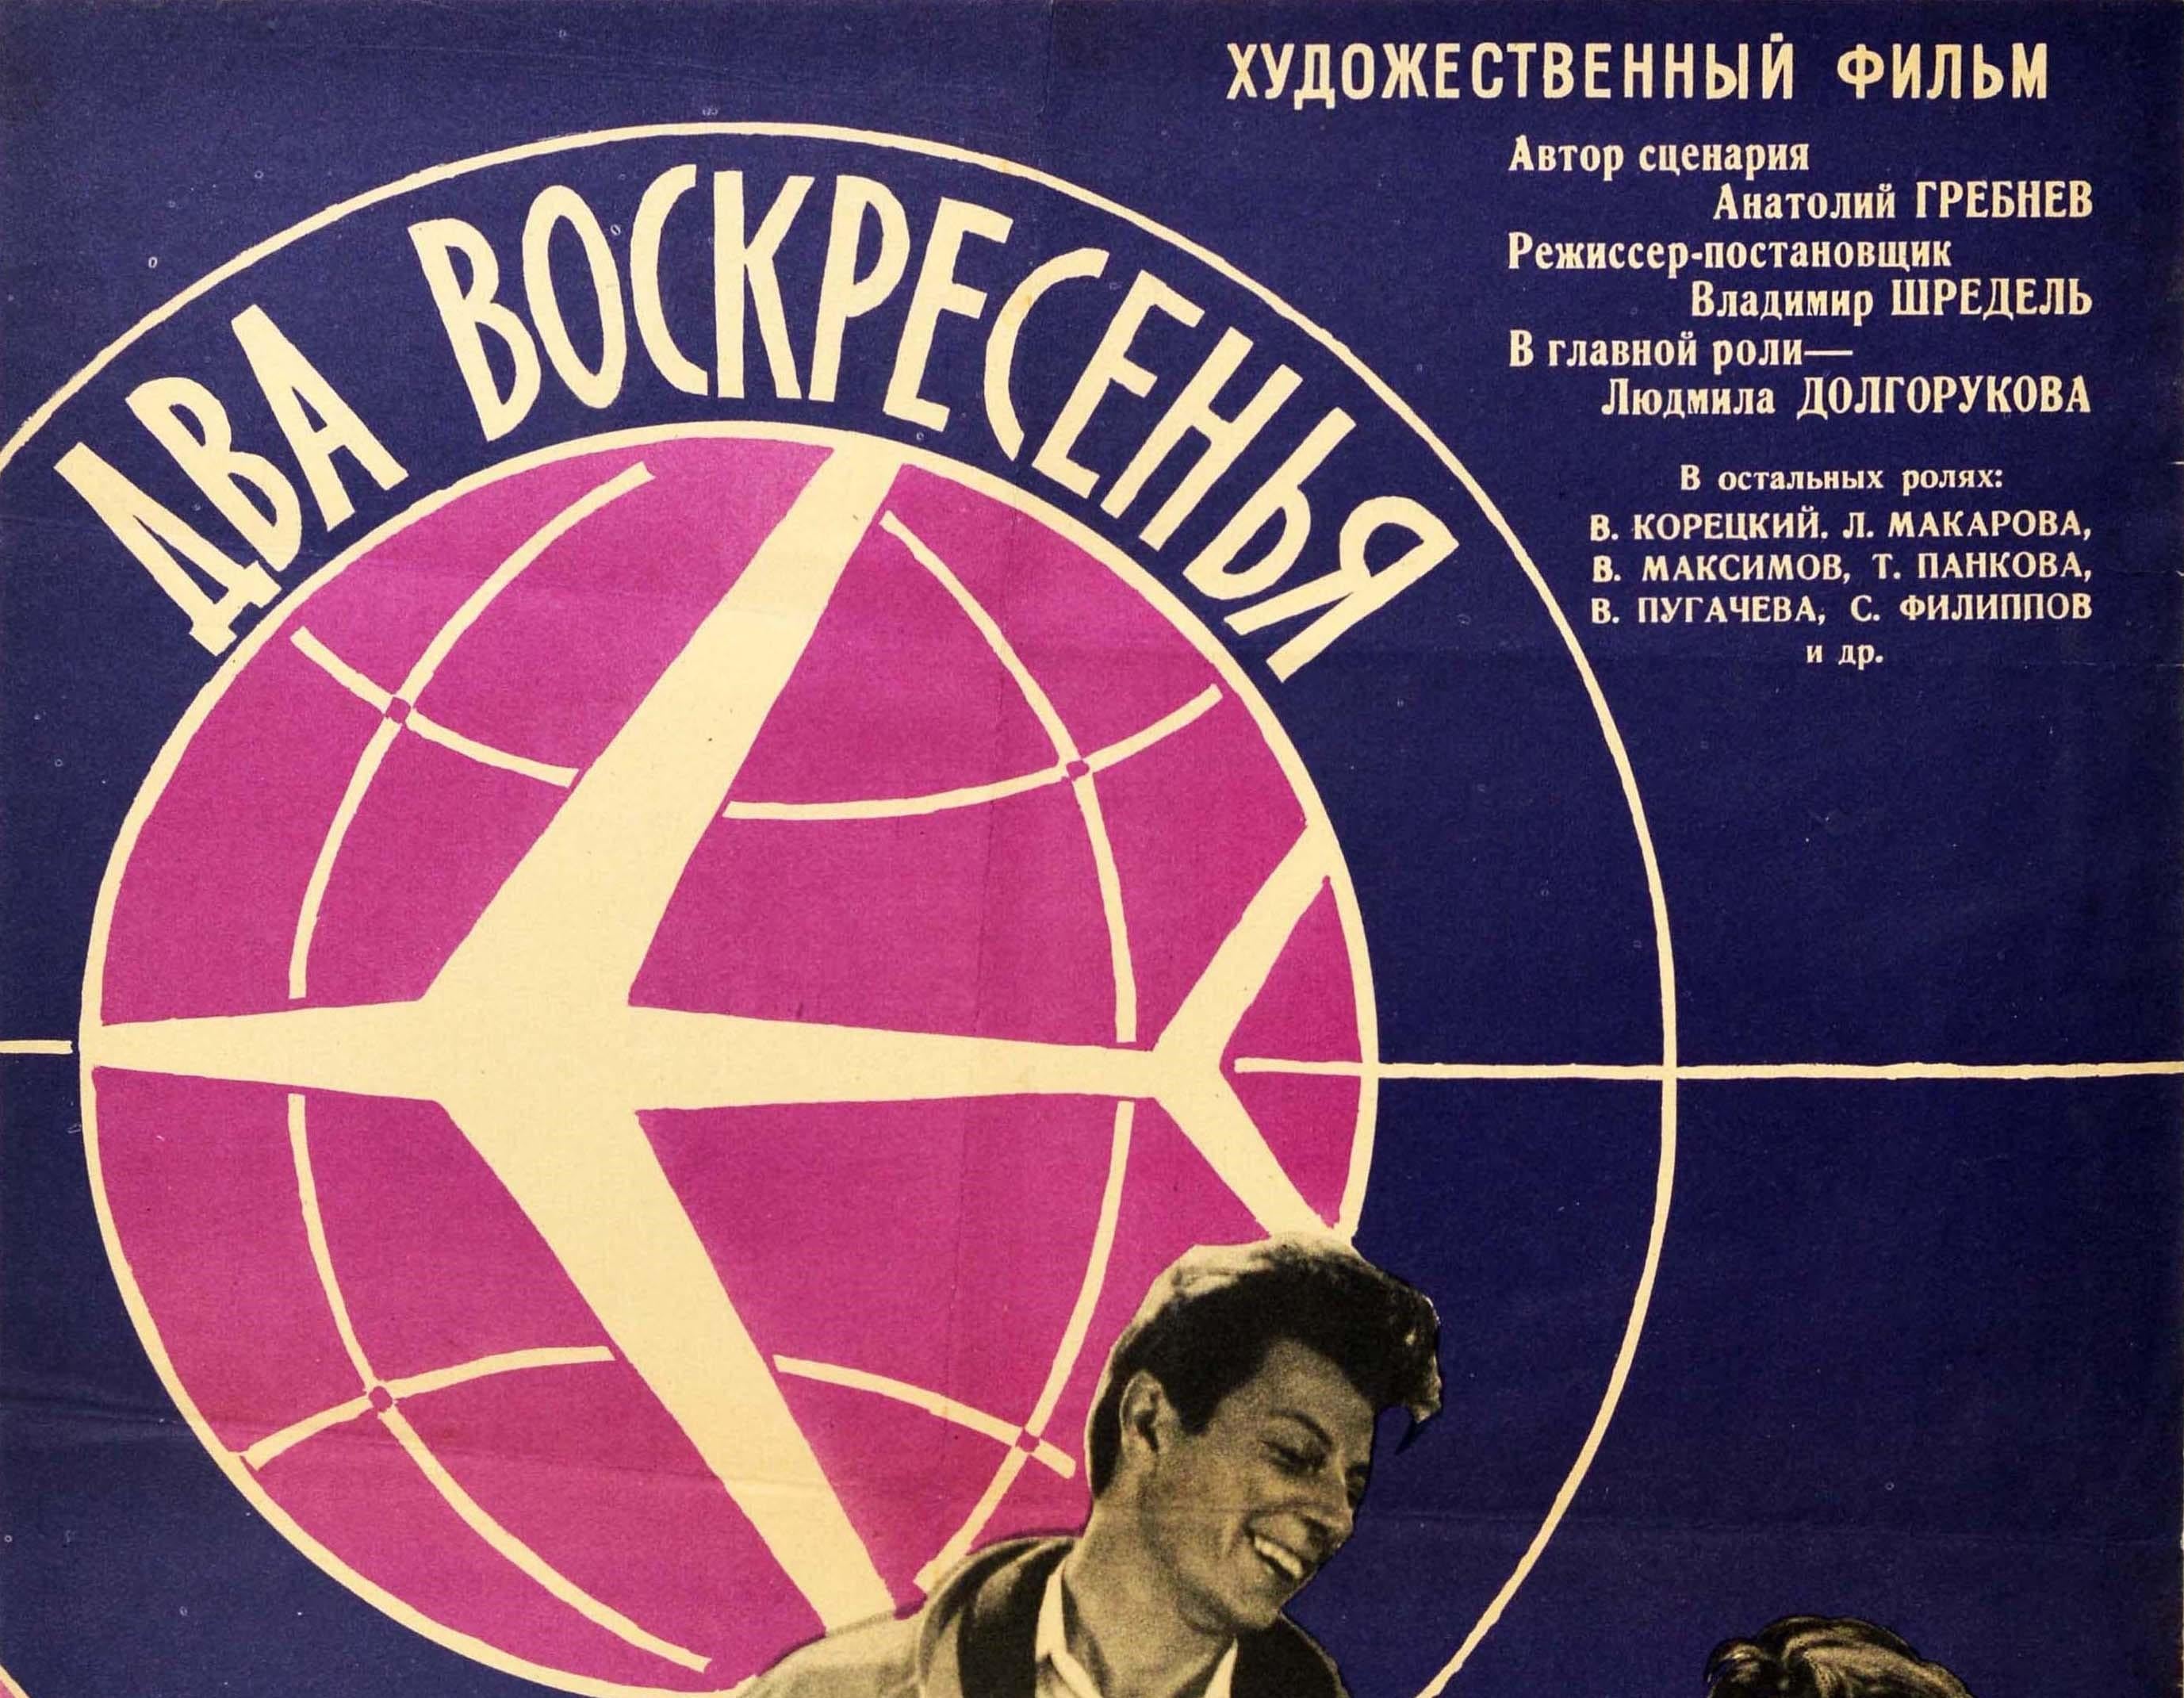 Original Vintage Soviet Movie Poster Two Sundays Drama Film dir Vladimir Shredel - Print by V Samodayanko